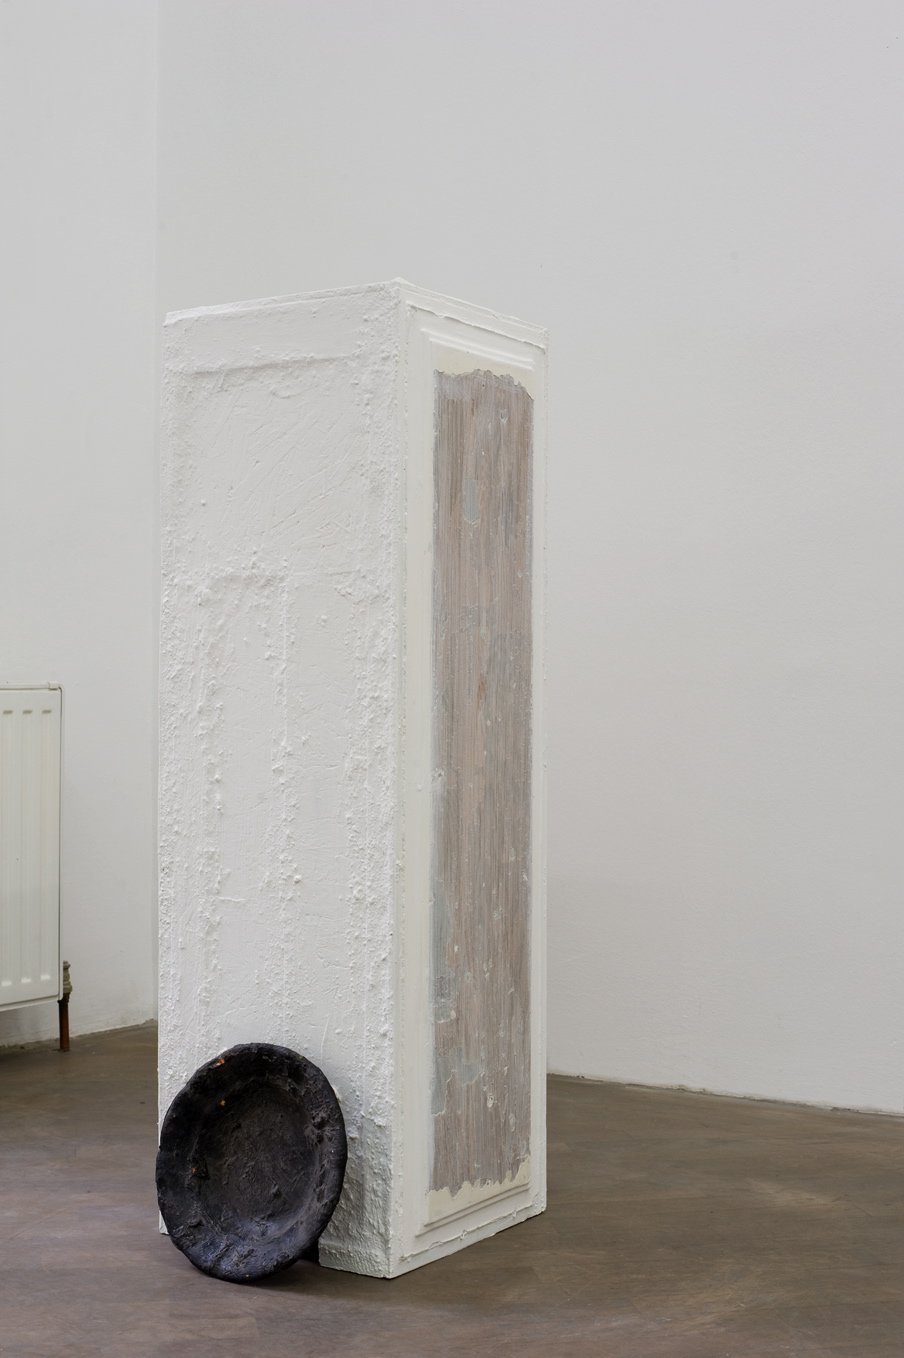 Franz AmannUntitled (Sockel mit Teller), 2011Plinth, plate, oil99.5 x 30.5 x 40 cm